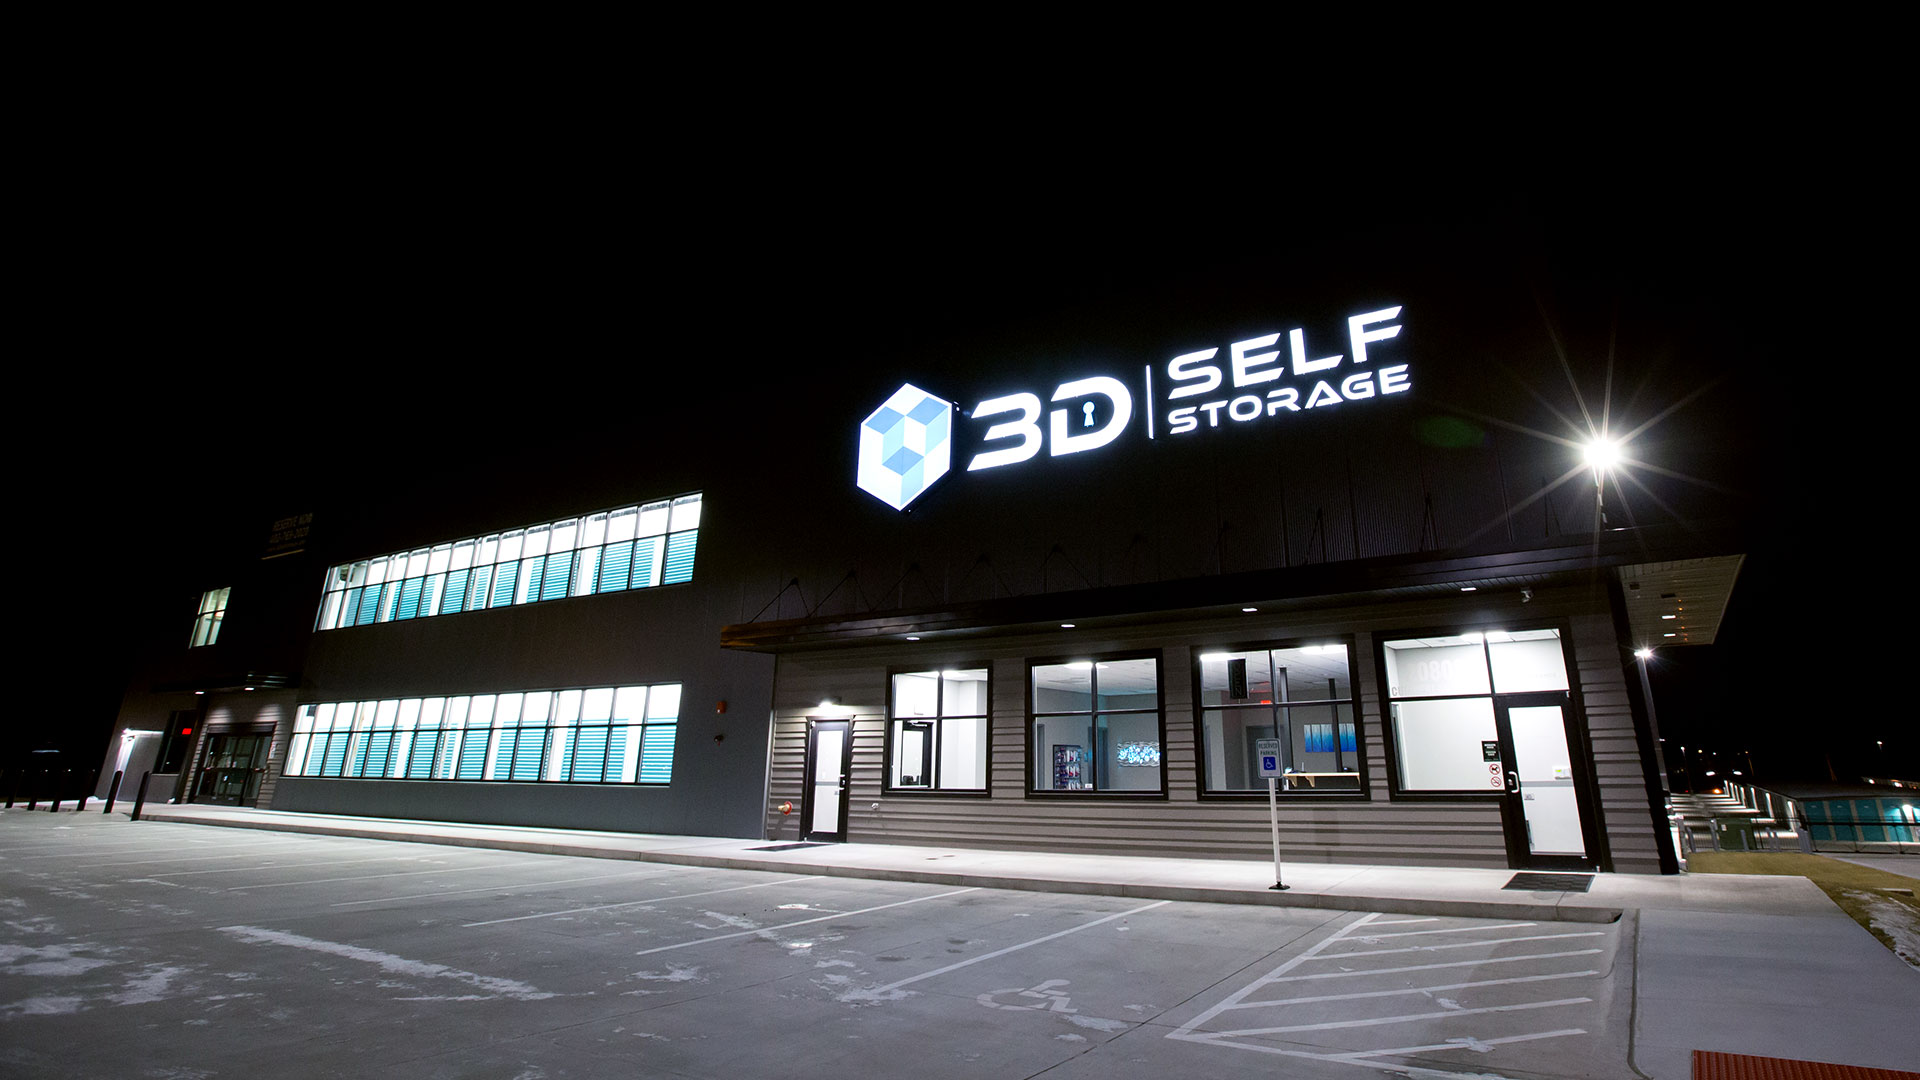 3D Self Storage exterior signage